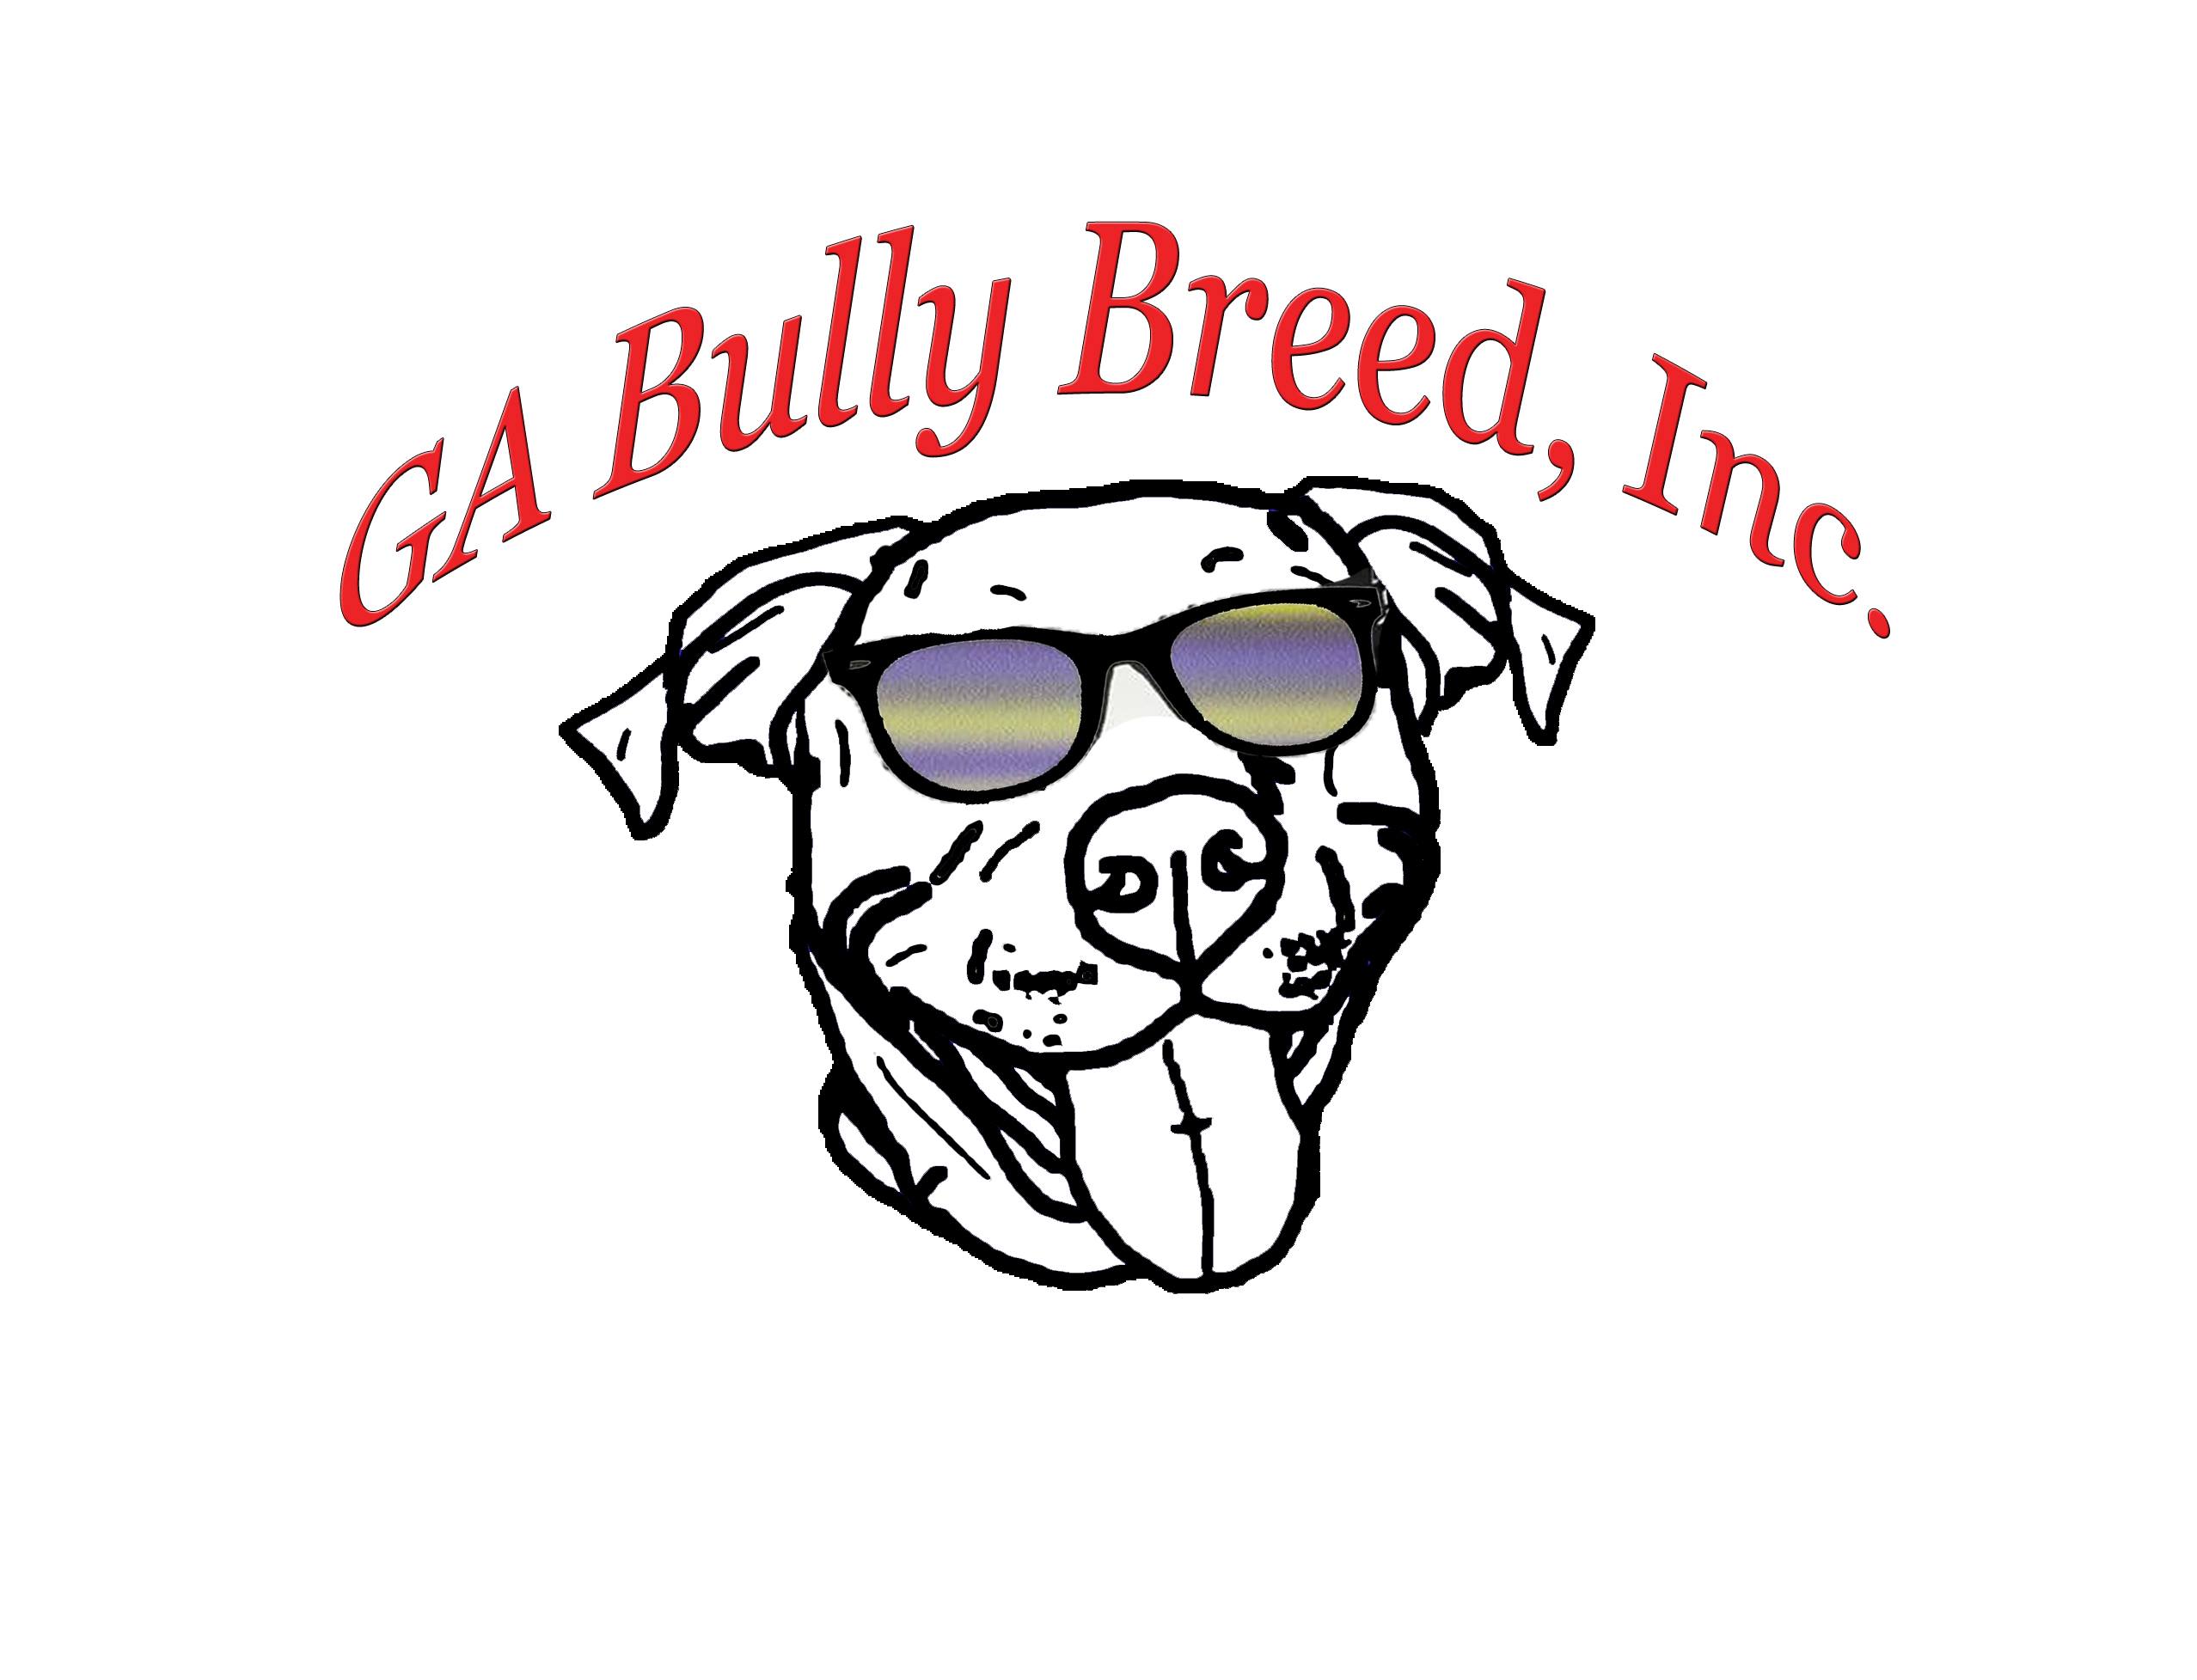 GA Bully Breed, Inc logo